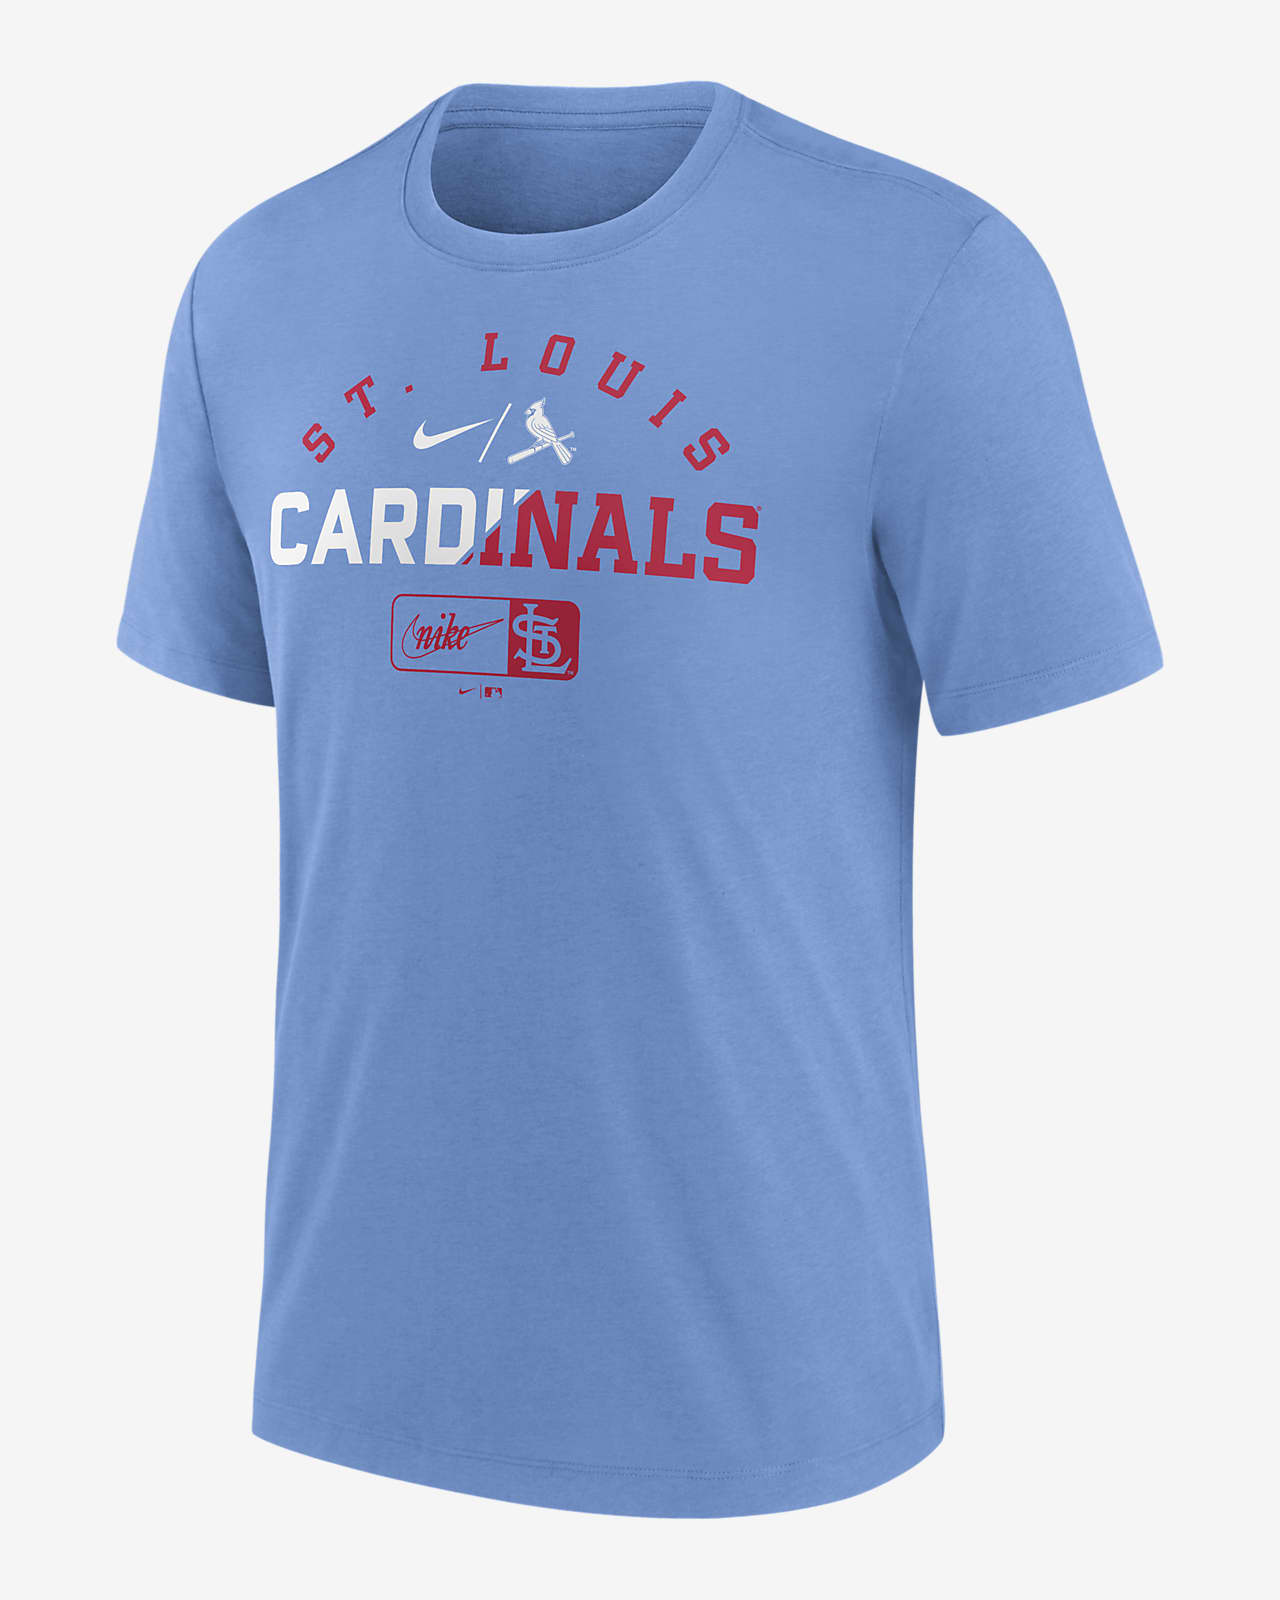 Nike Cooperstown Rewind Review (MLB St. Louis Cardinals) Men's T-Shirt